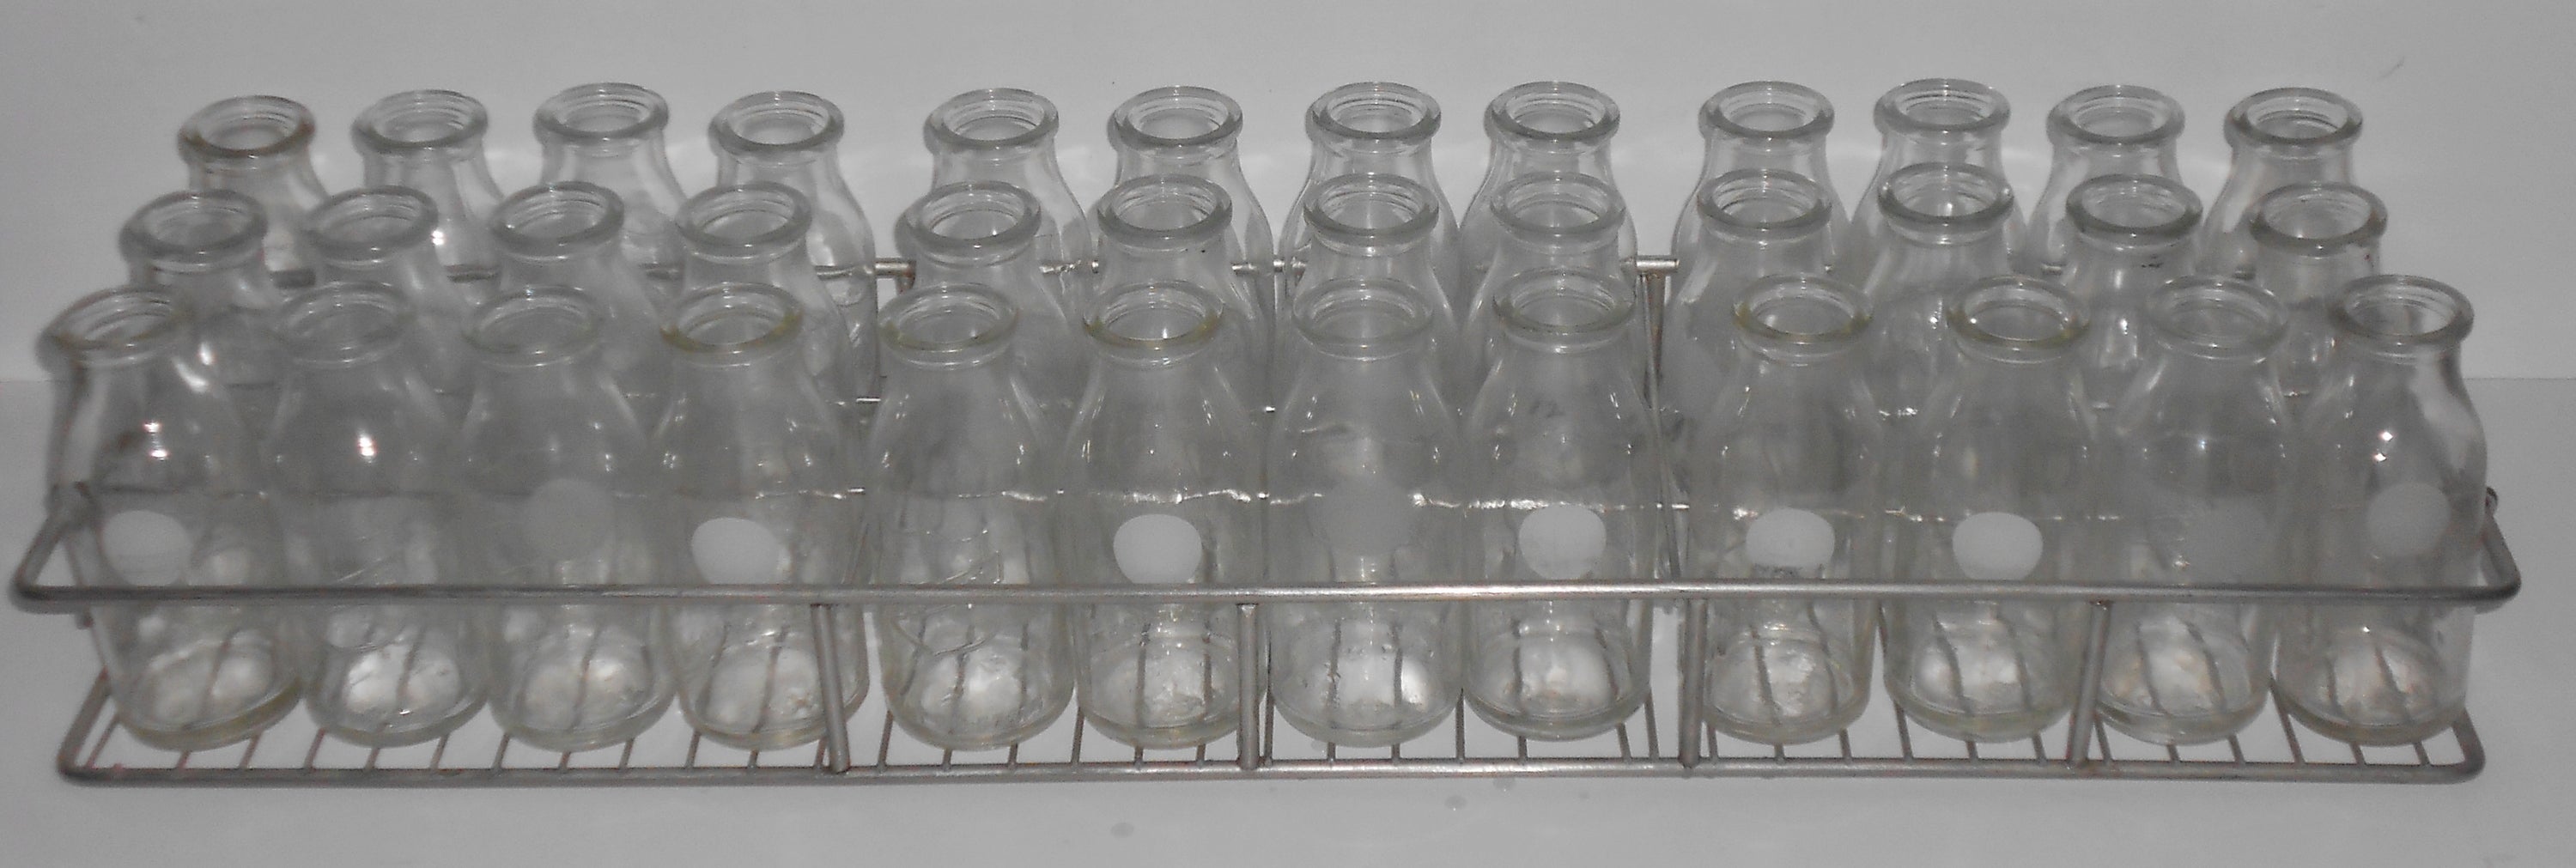 Milk sampling bottles (36) from Mojommier in stainless steel tray